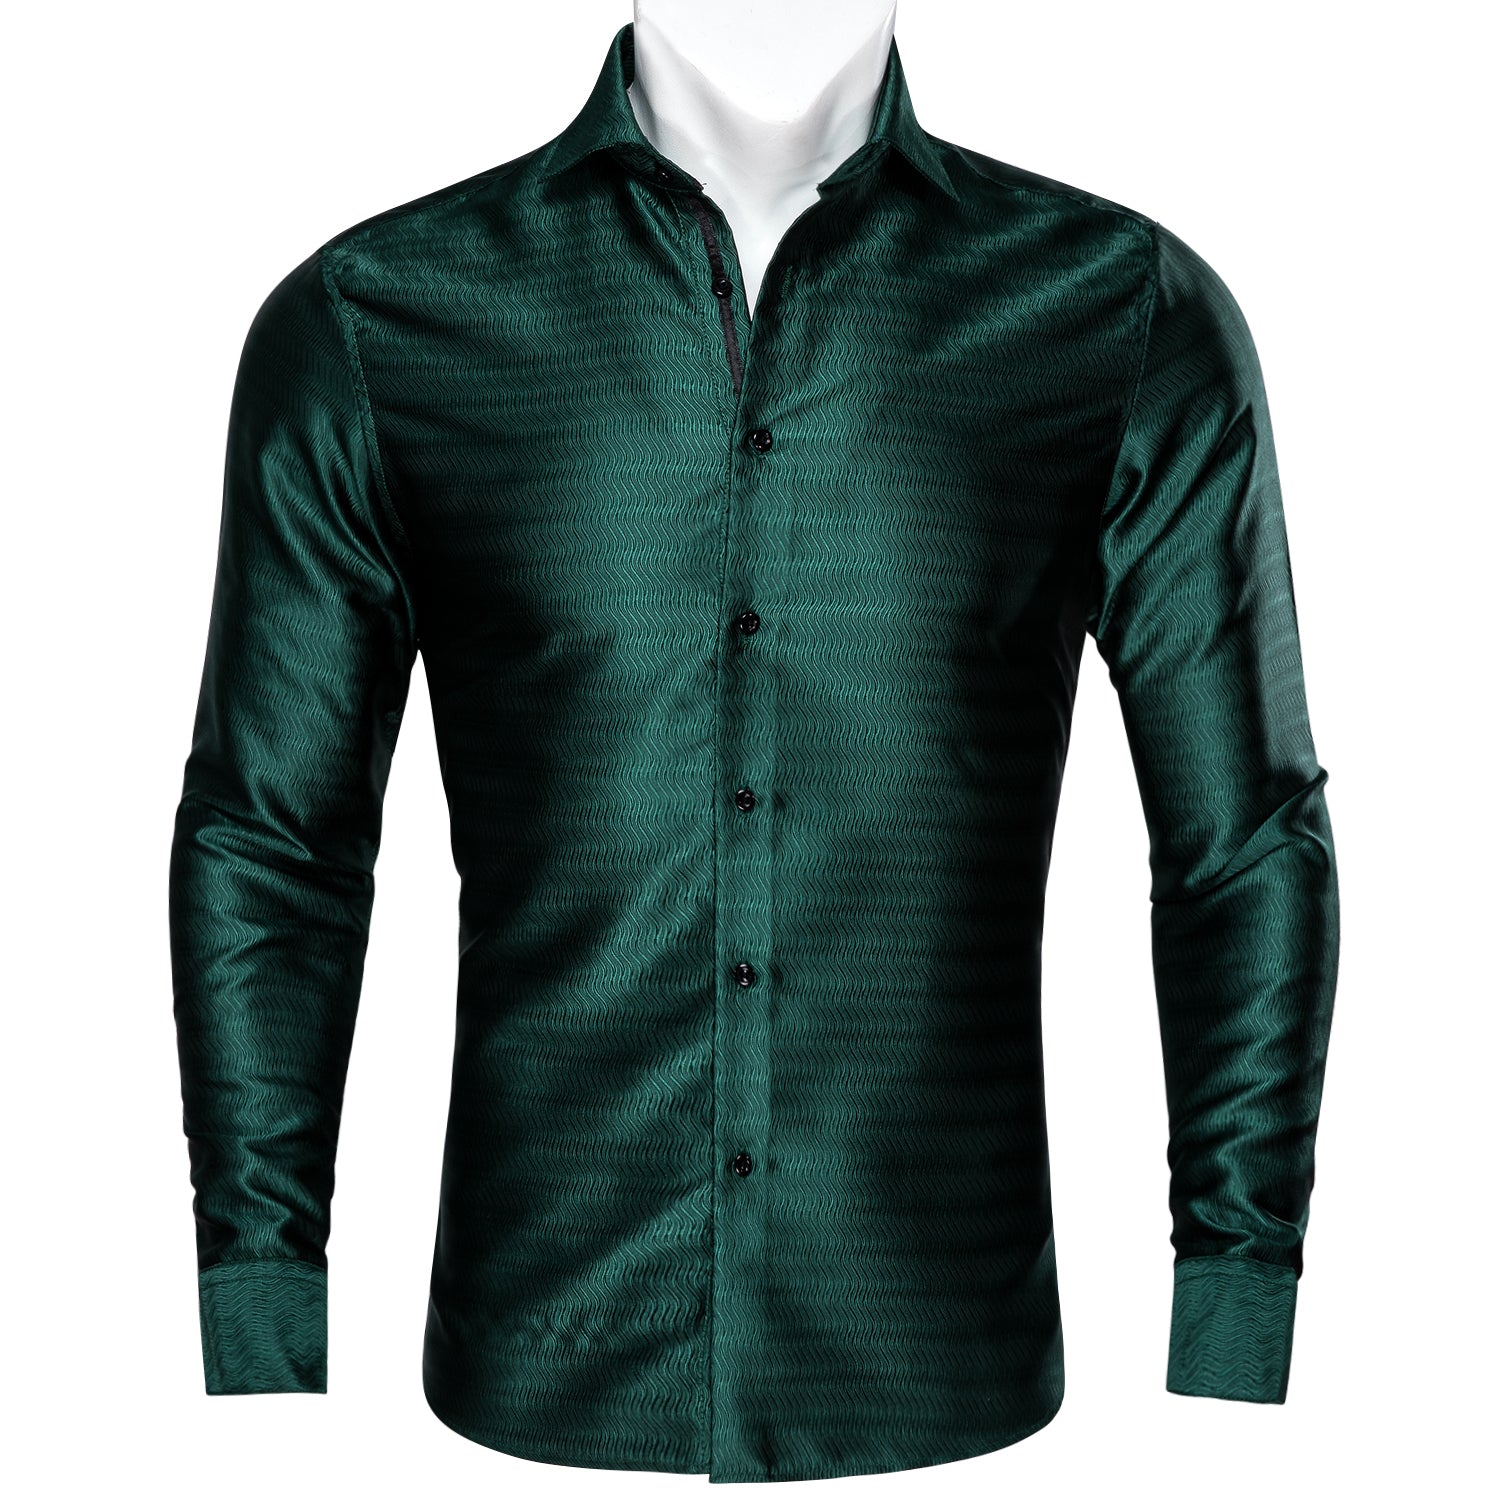 Barry.wang Button Down Shirt Green Solid Silk Shirt for Men Classic Hot